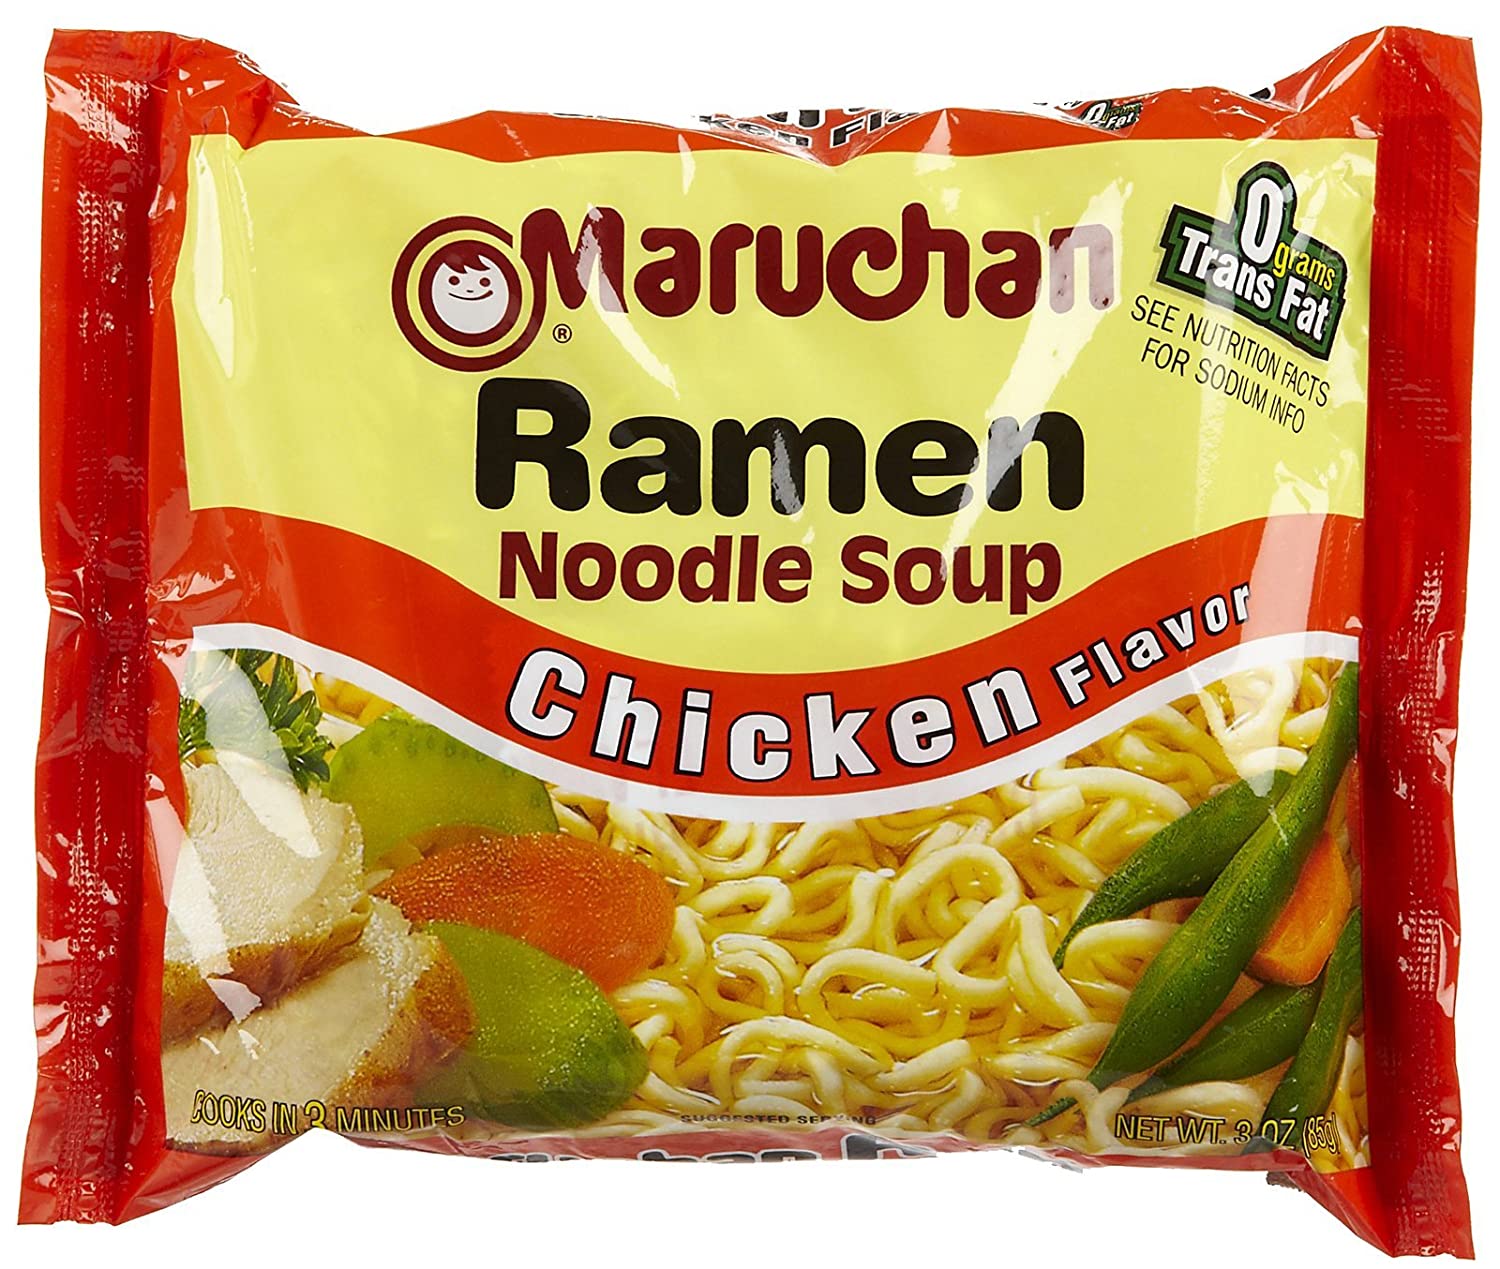 Top Ramen vs Maruchan | Which one is better? Final verdict Maruchan ramen noodle soup